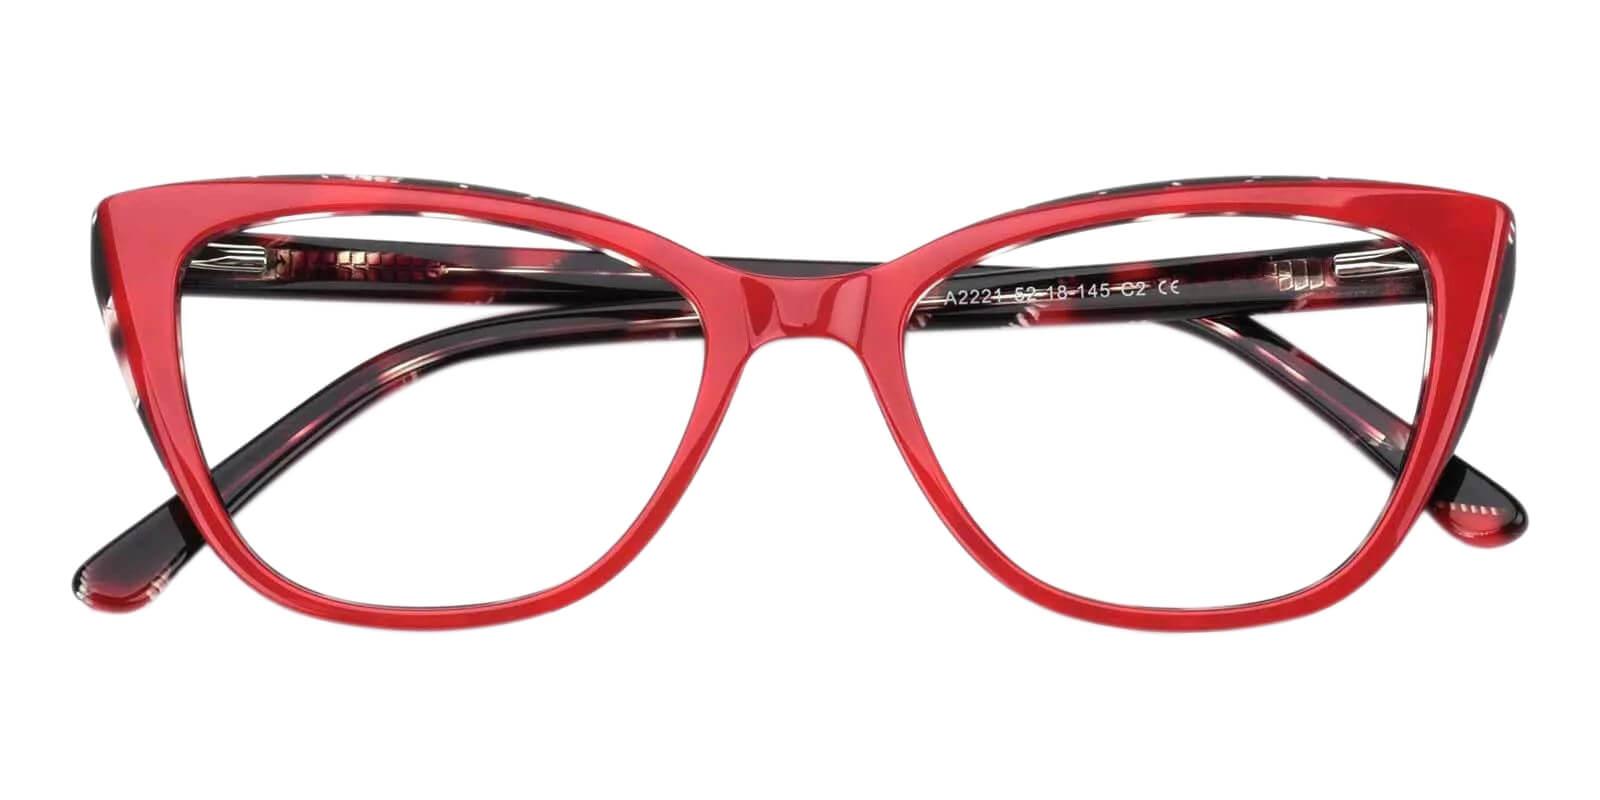 Teddy Red Acetate Eyeglasses , Fashion , SpringHinges , UniversalBridgeFit Frames from ABBE Glasses